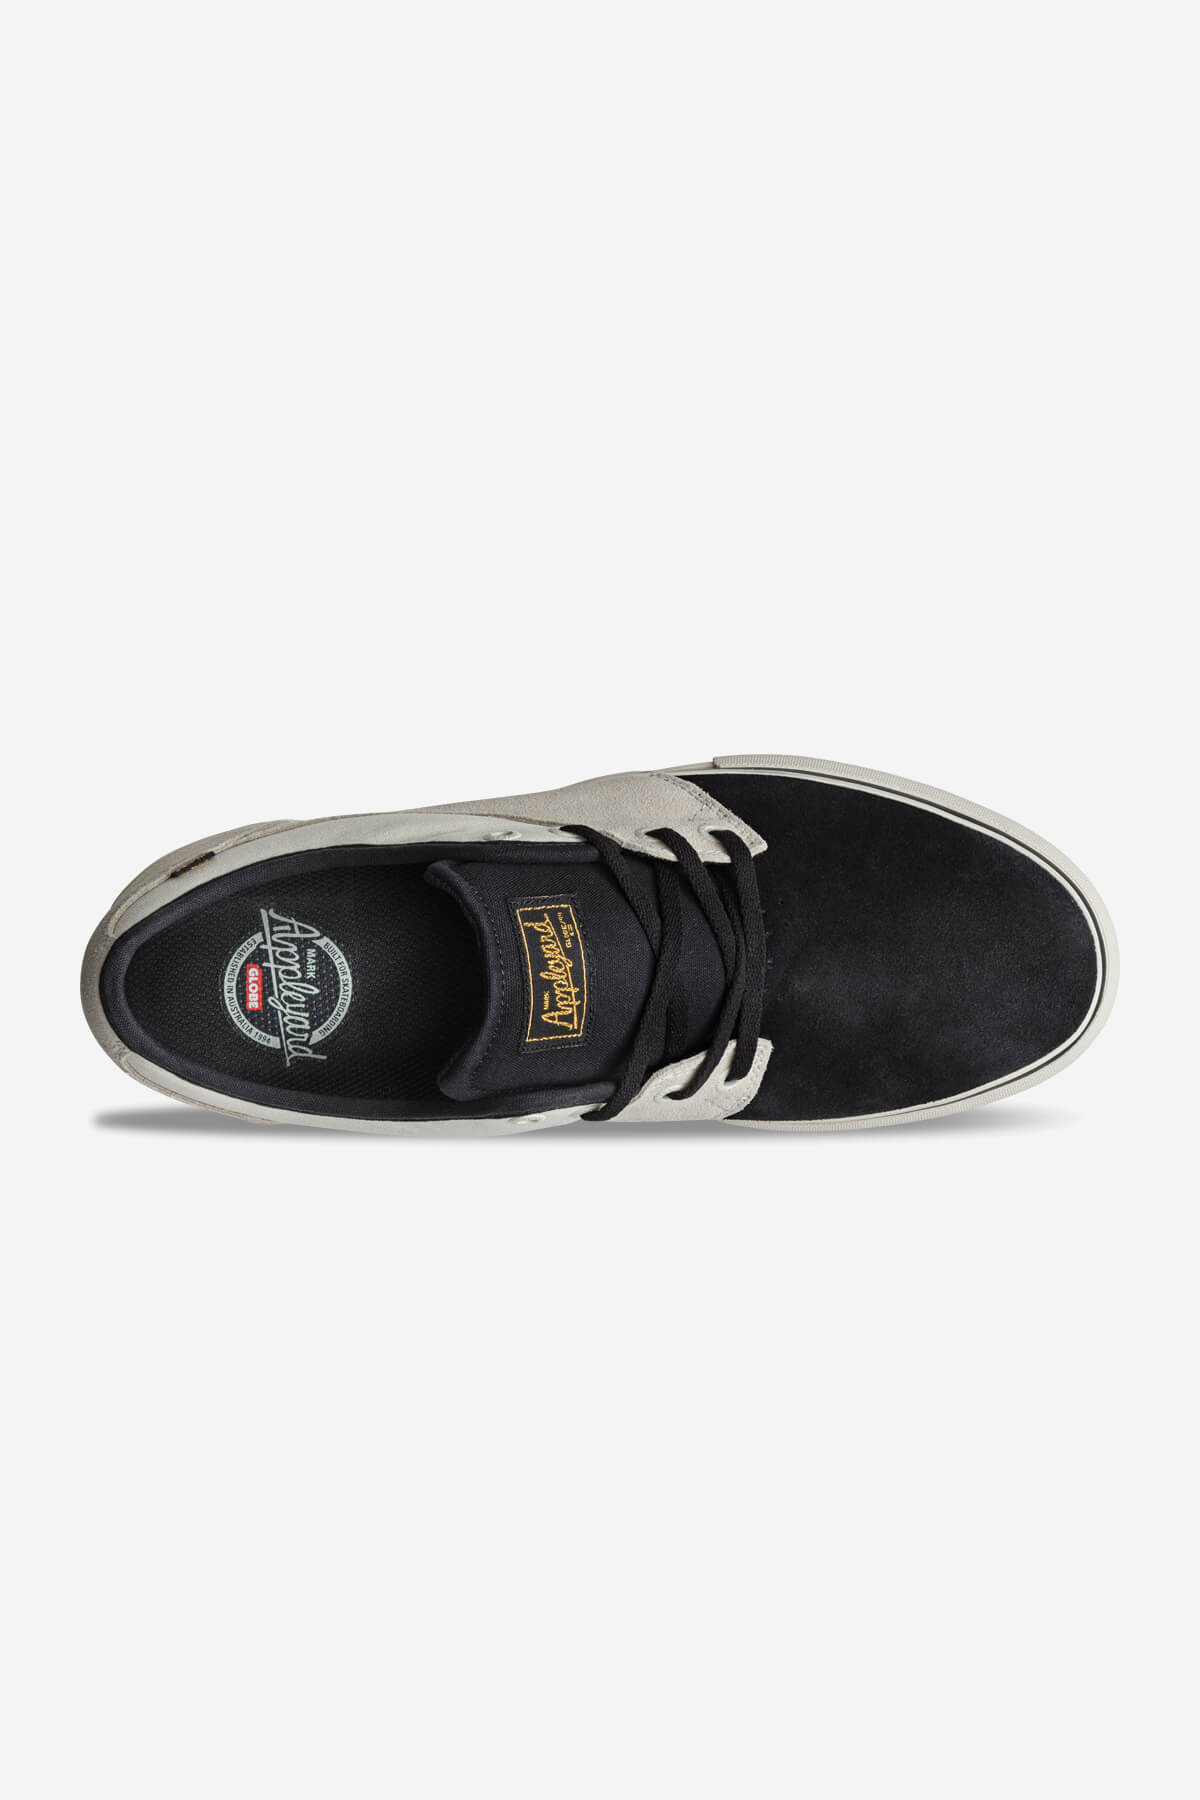 mahalo black off white skate shoes